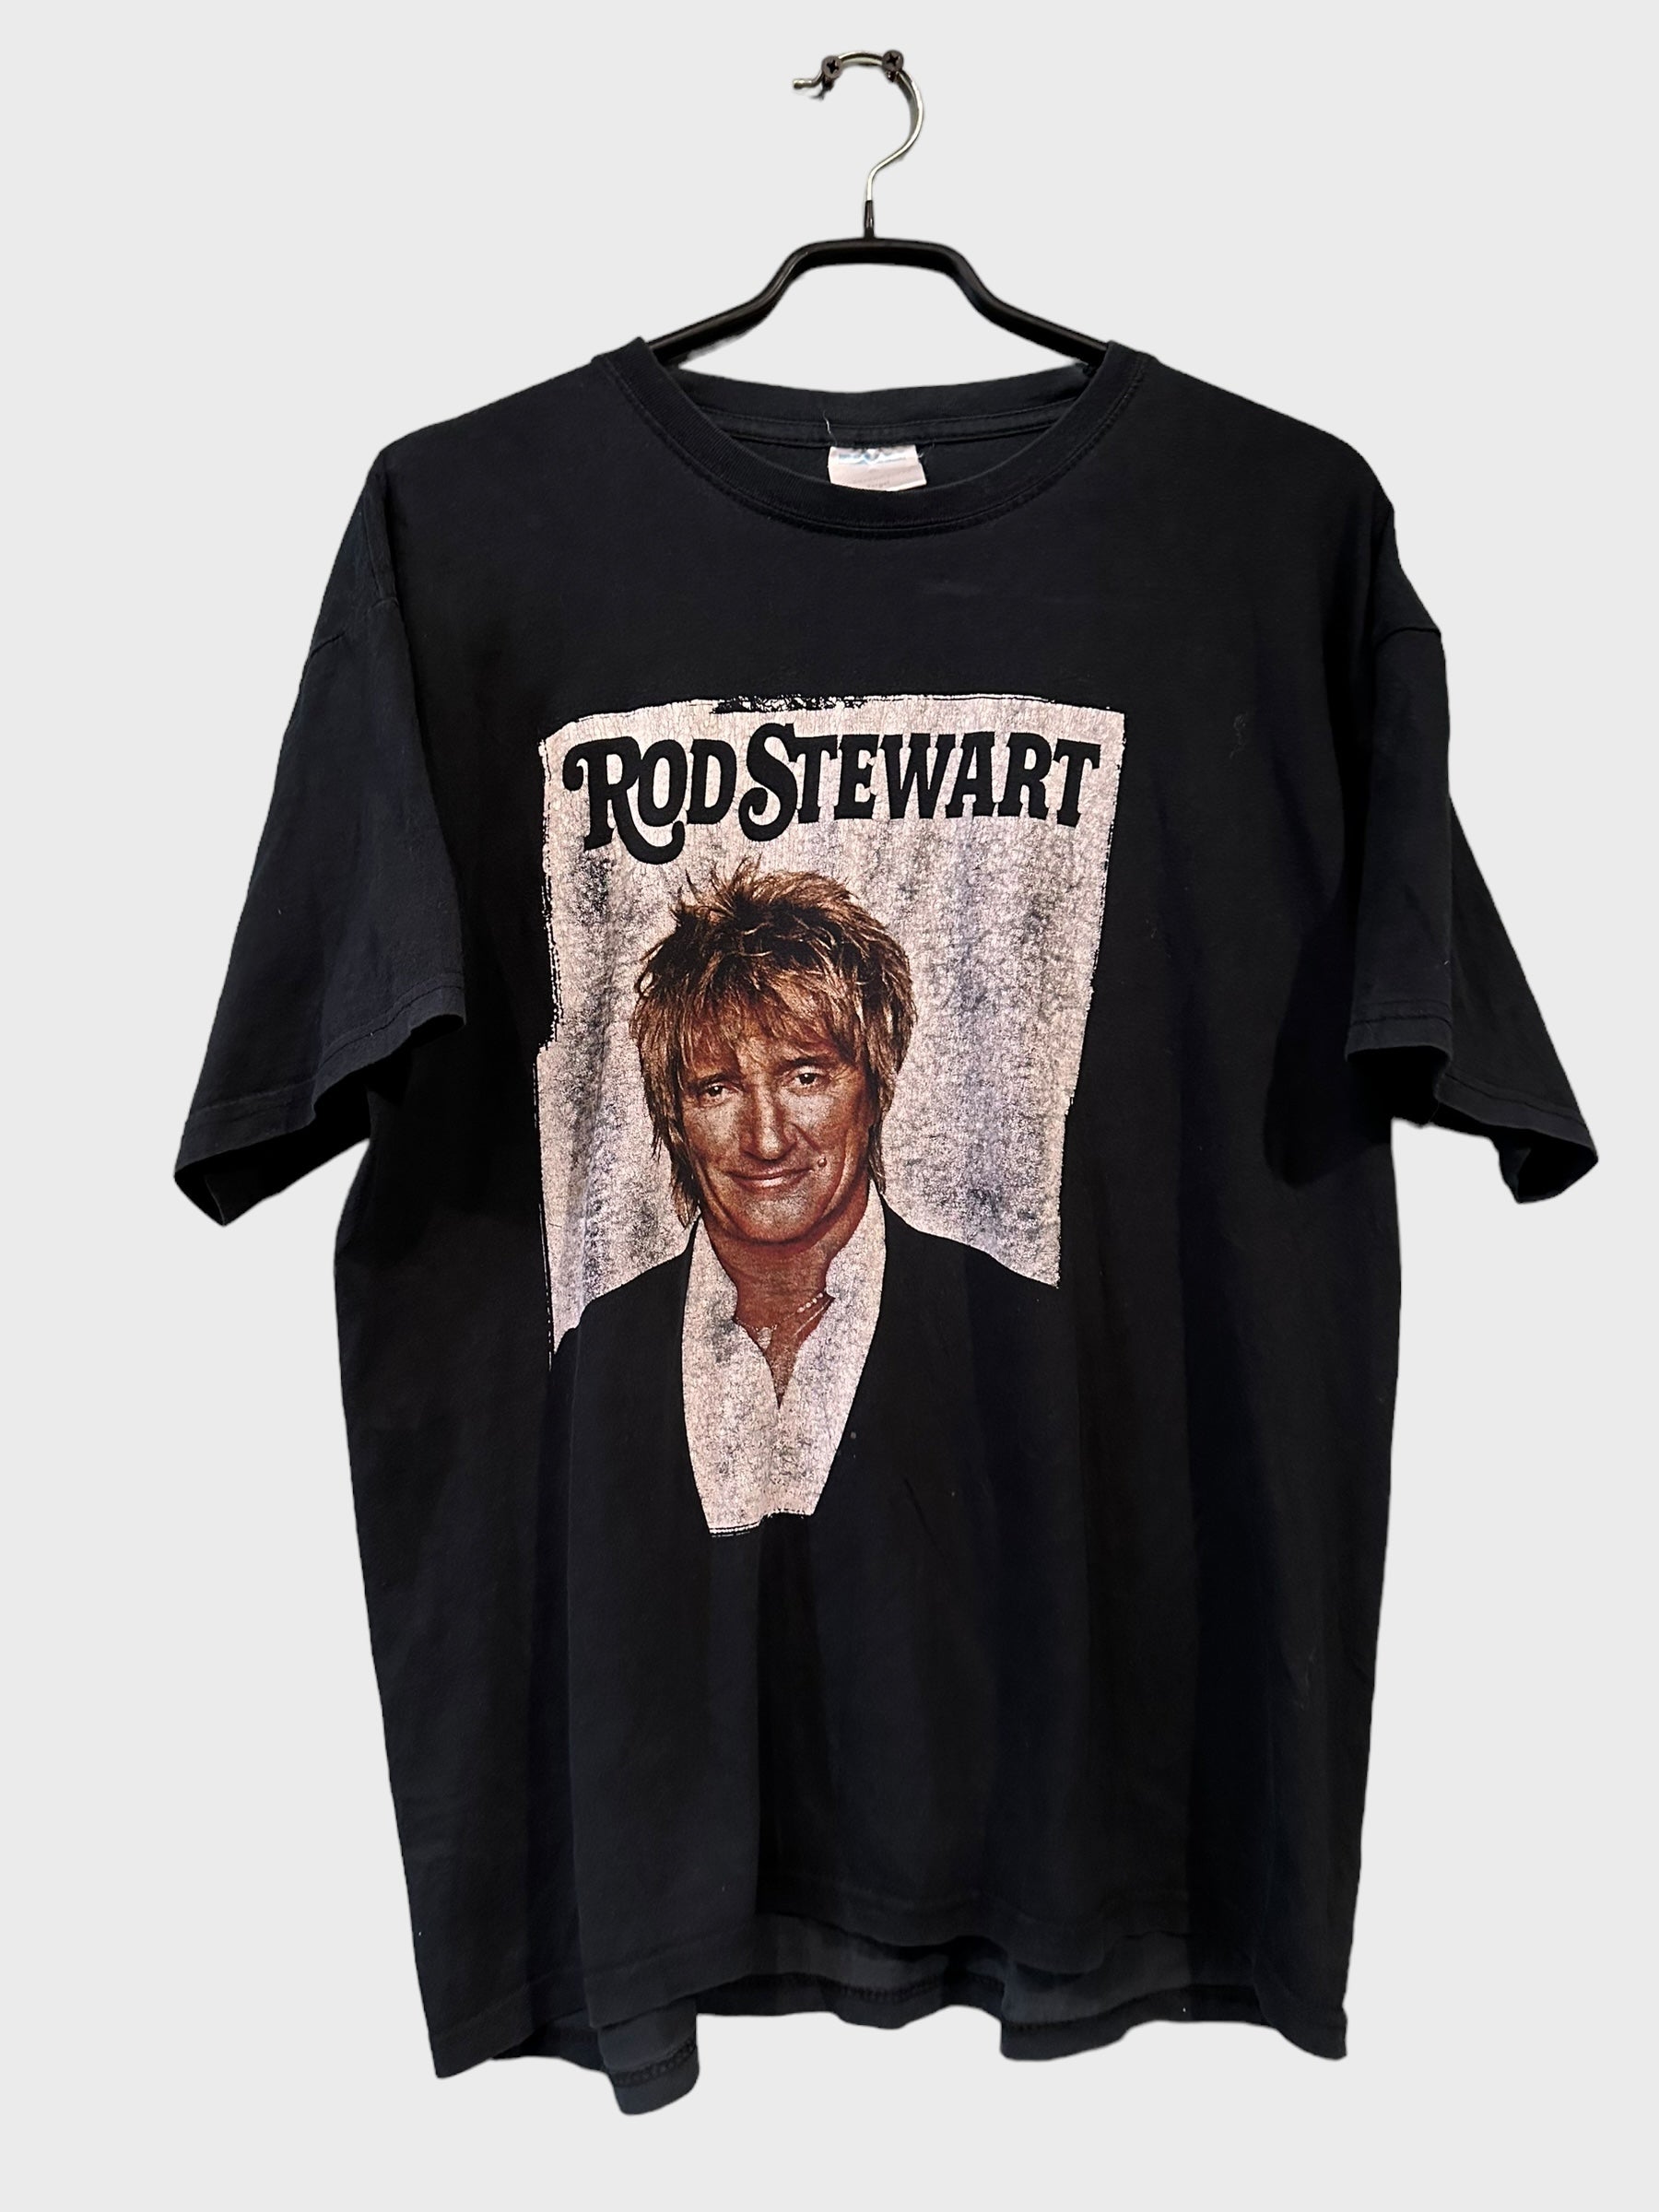 Rod Stewart 2007 Tour Tshirt